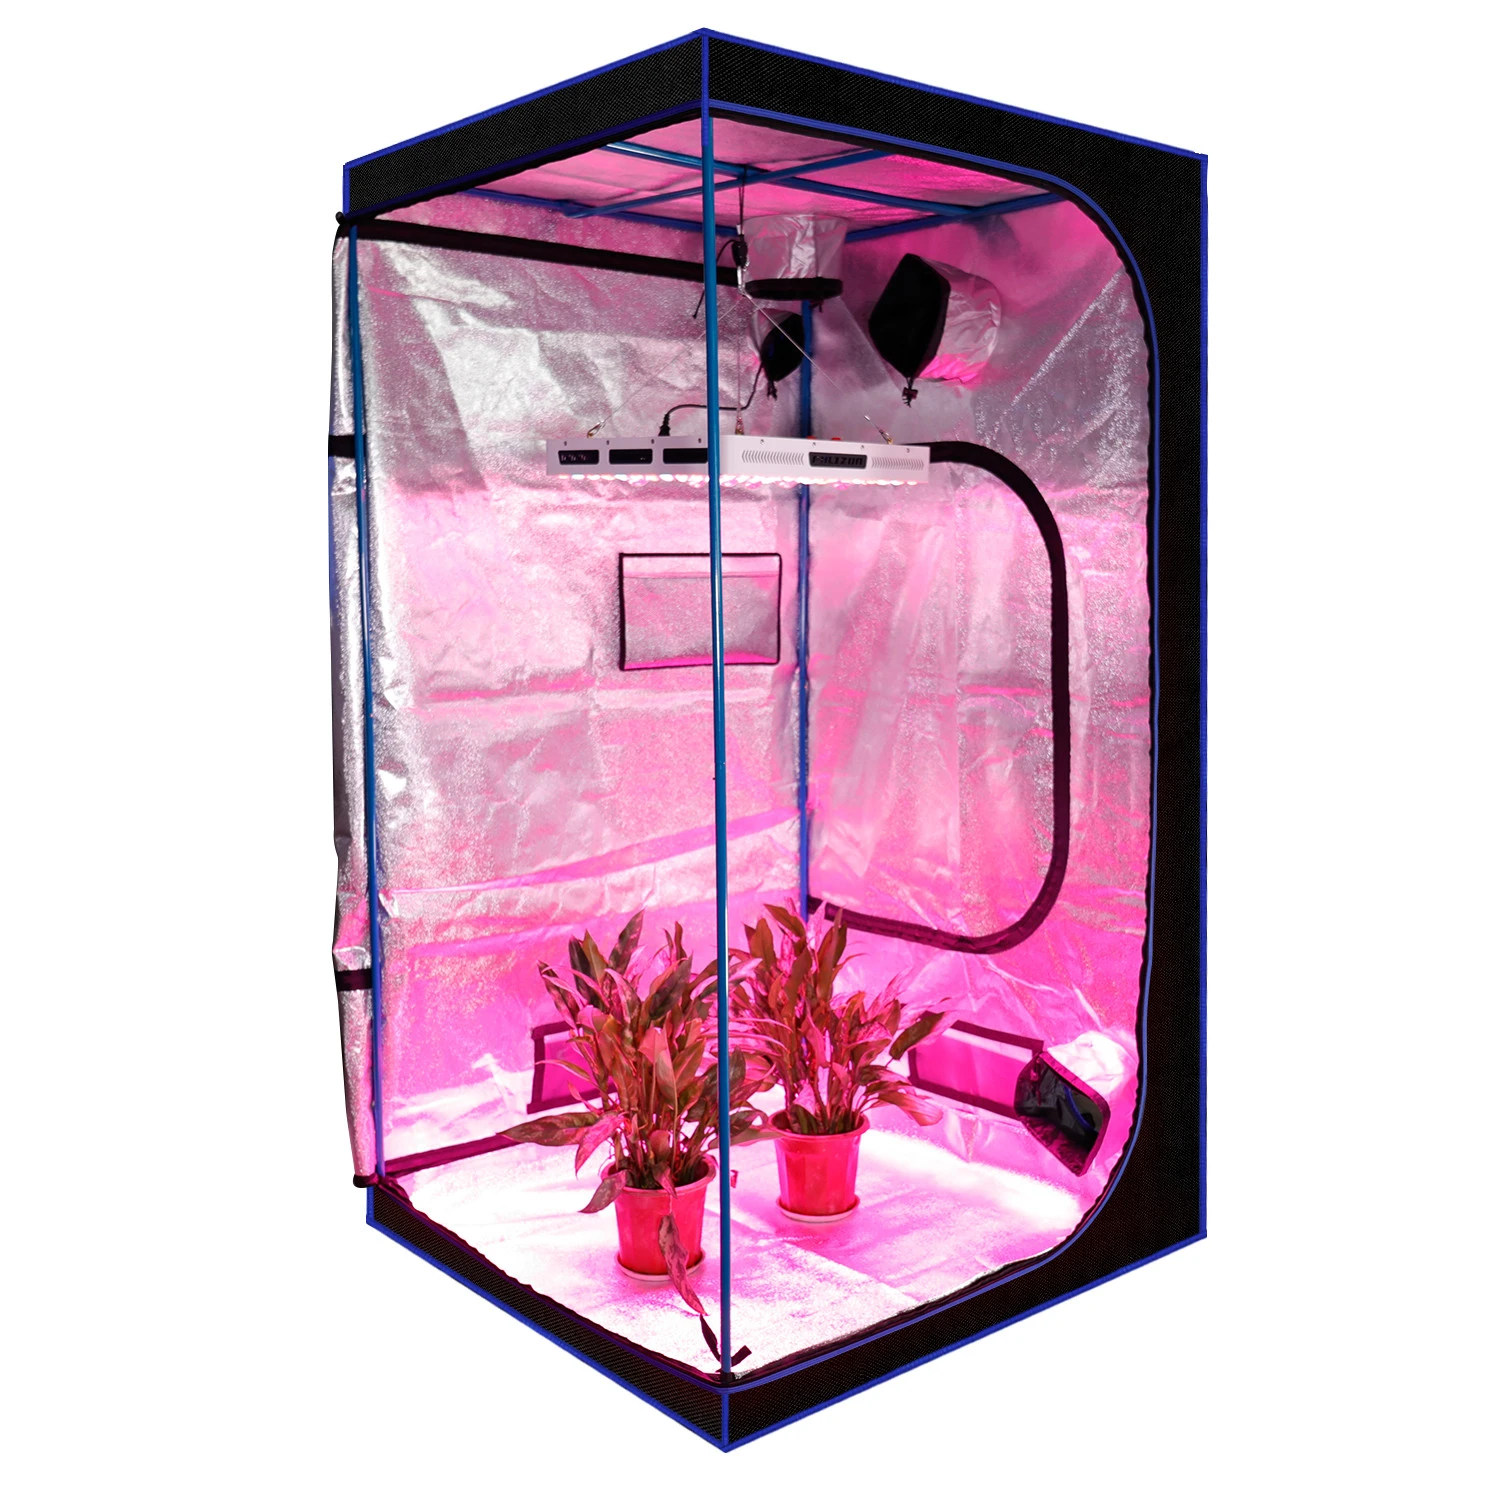 Greenhouse hydroponics Reflective waterproof indoor grow tent grow room  kits 4x4 US fast shipping